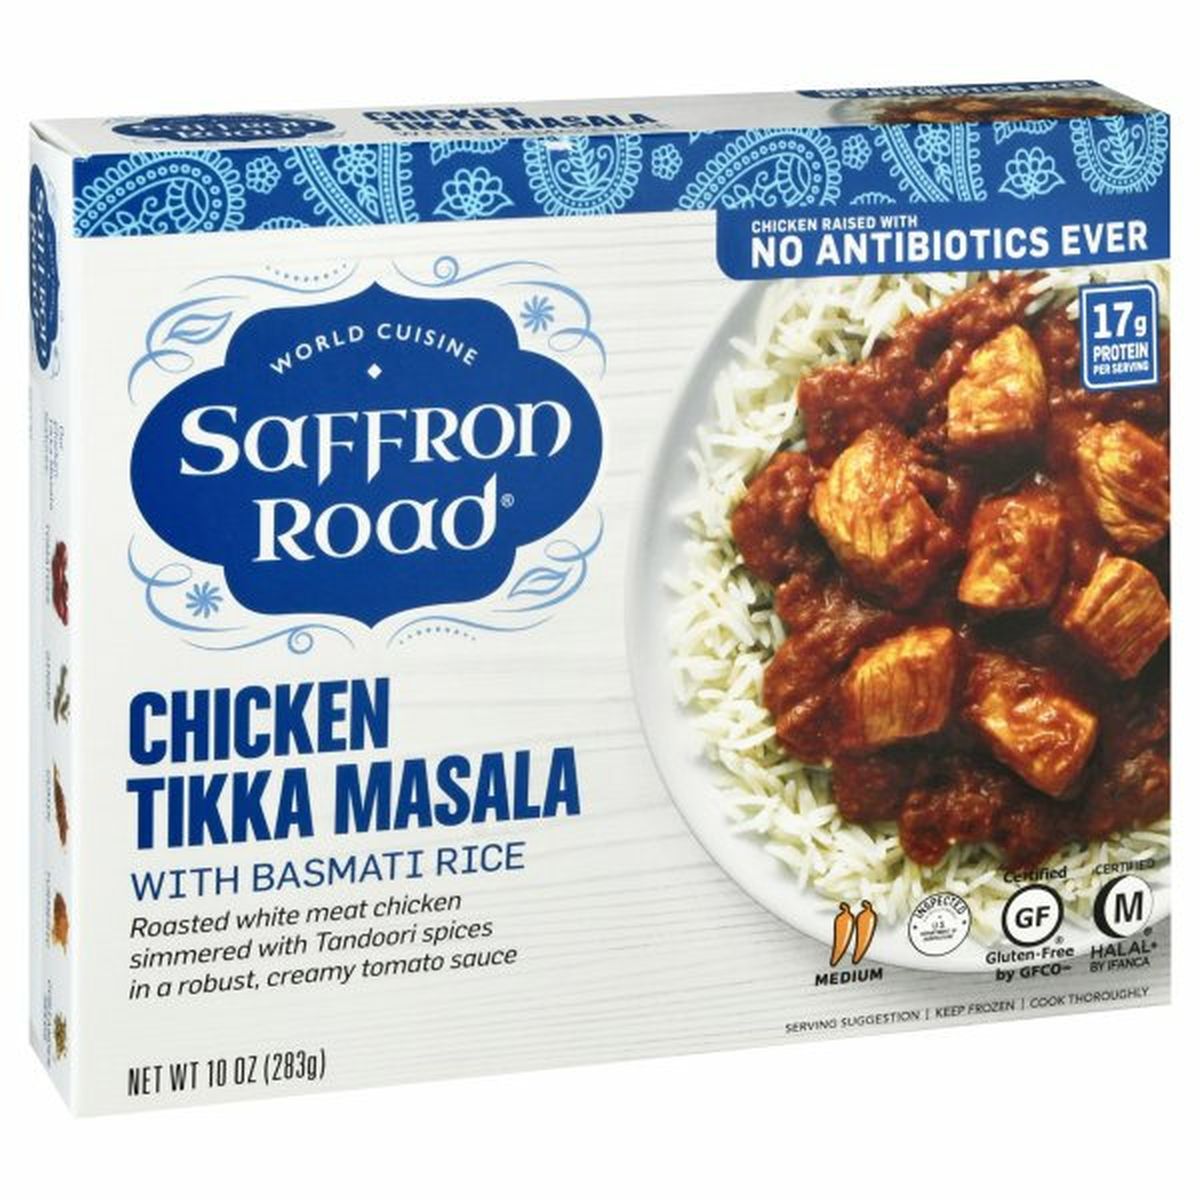 Calories in Saffron Road Chicken Tikka Masala with Basmati Rice, Medium